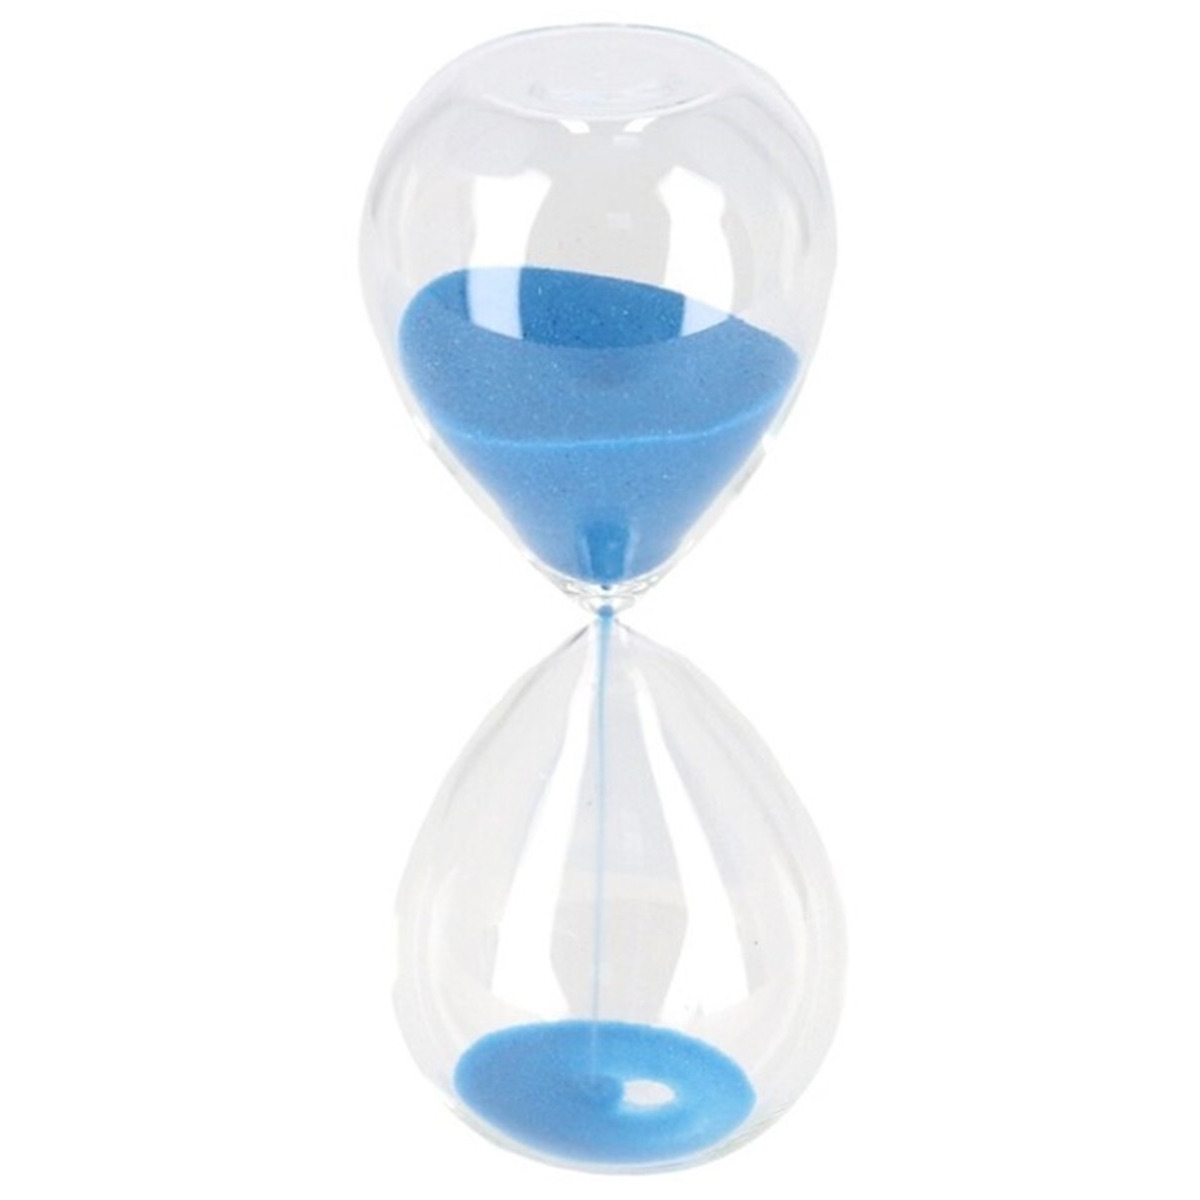 Zandloper cilinder - decoratie of tijdsmeting - 5 minuten blauw zand - H12 cm - glas -